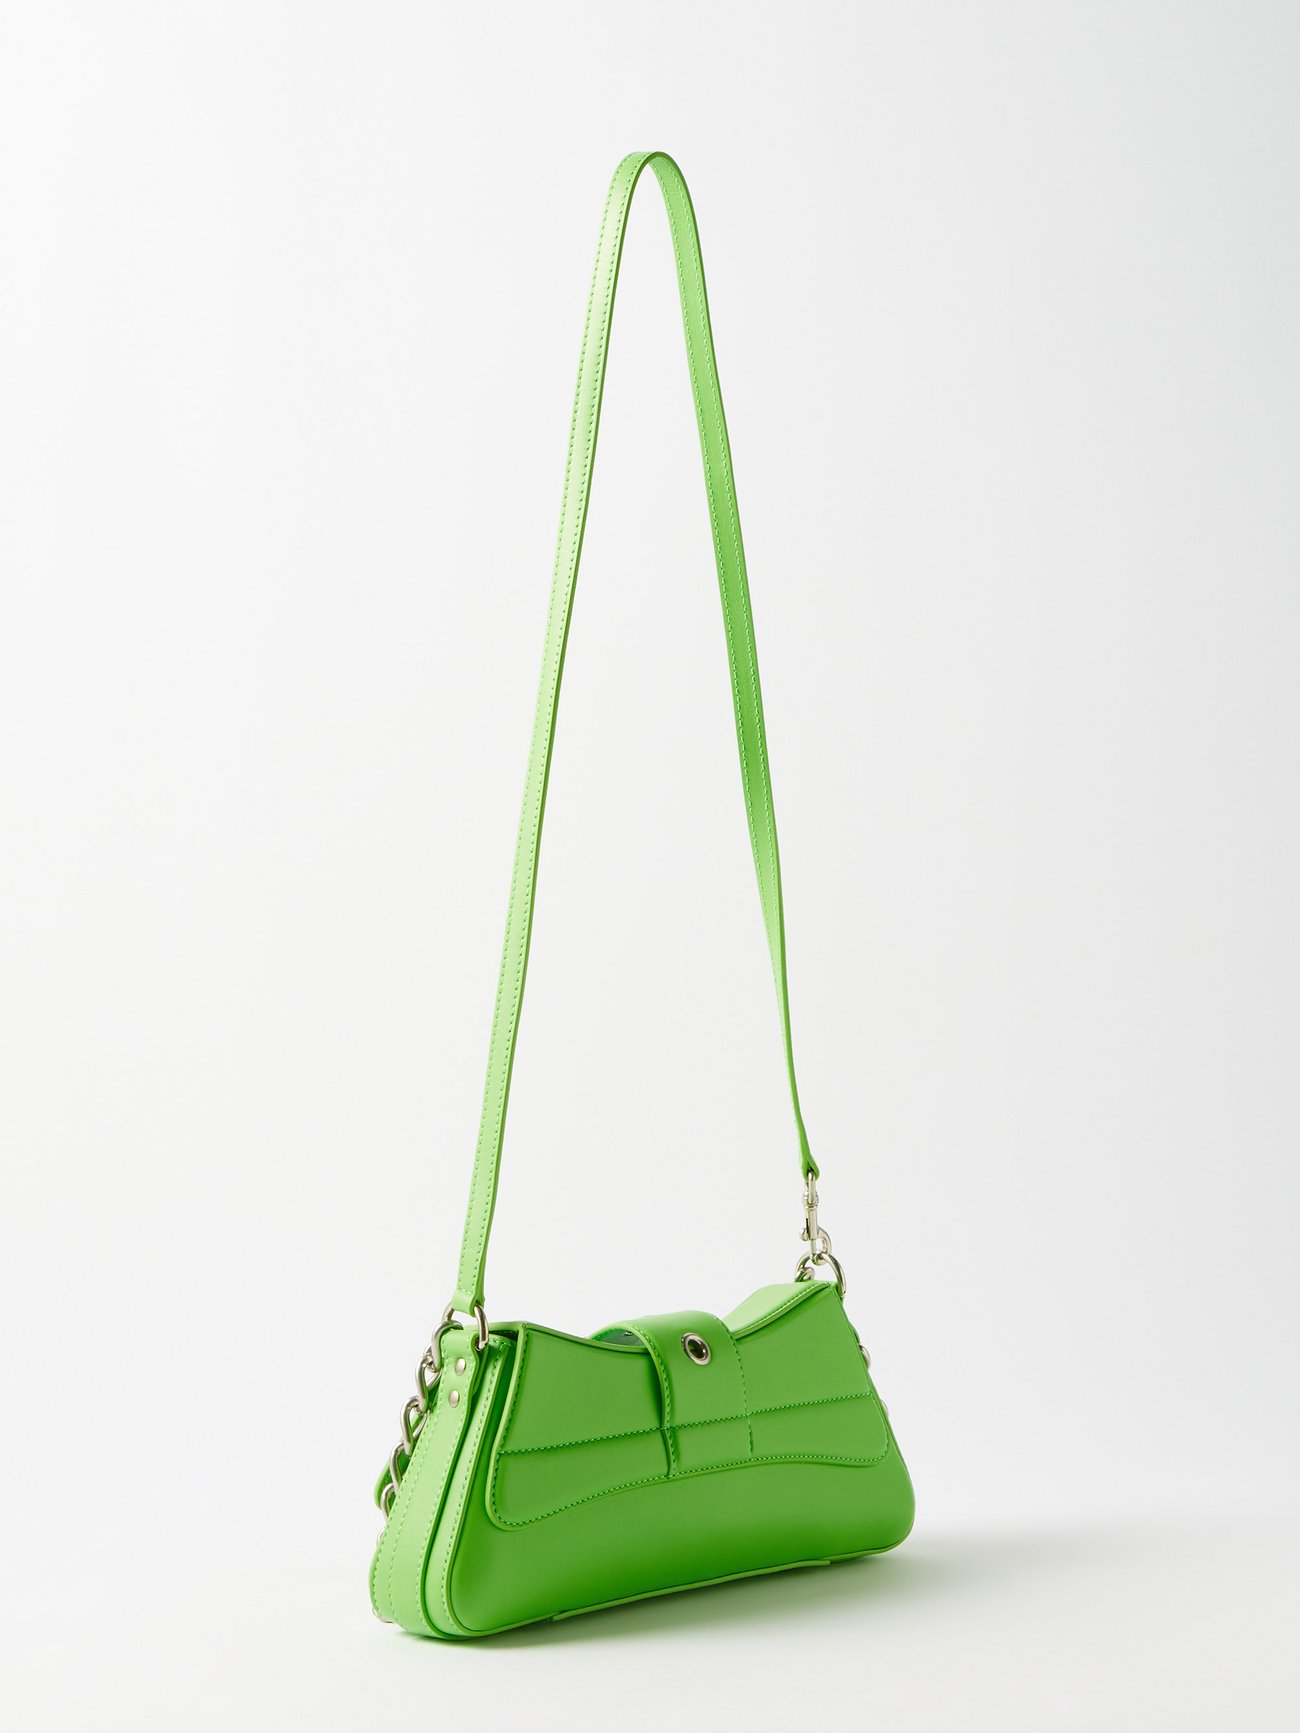 Balenciaga - Lindsay S Leather Shoulder Bag - Womens - Green